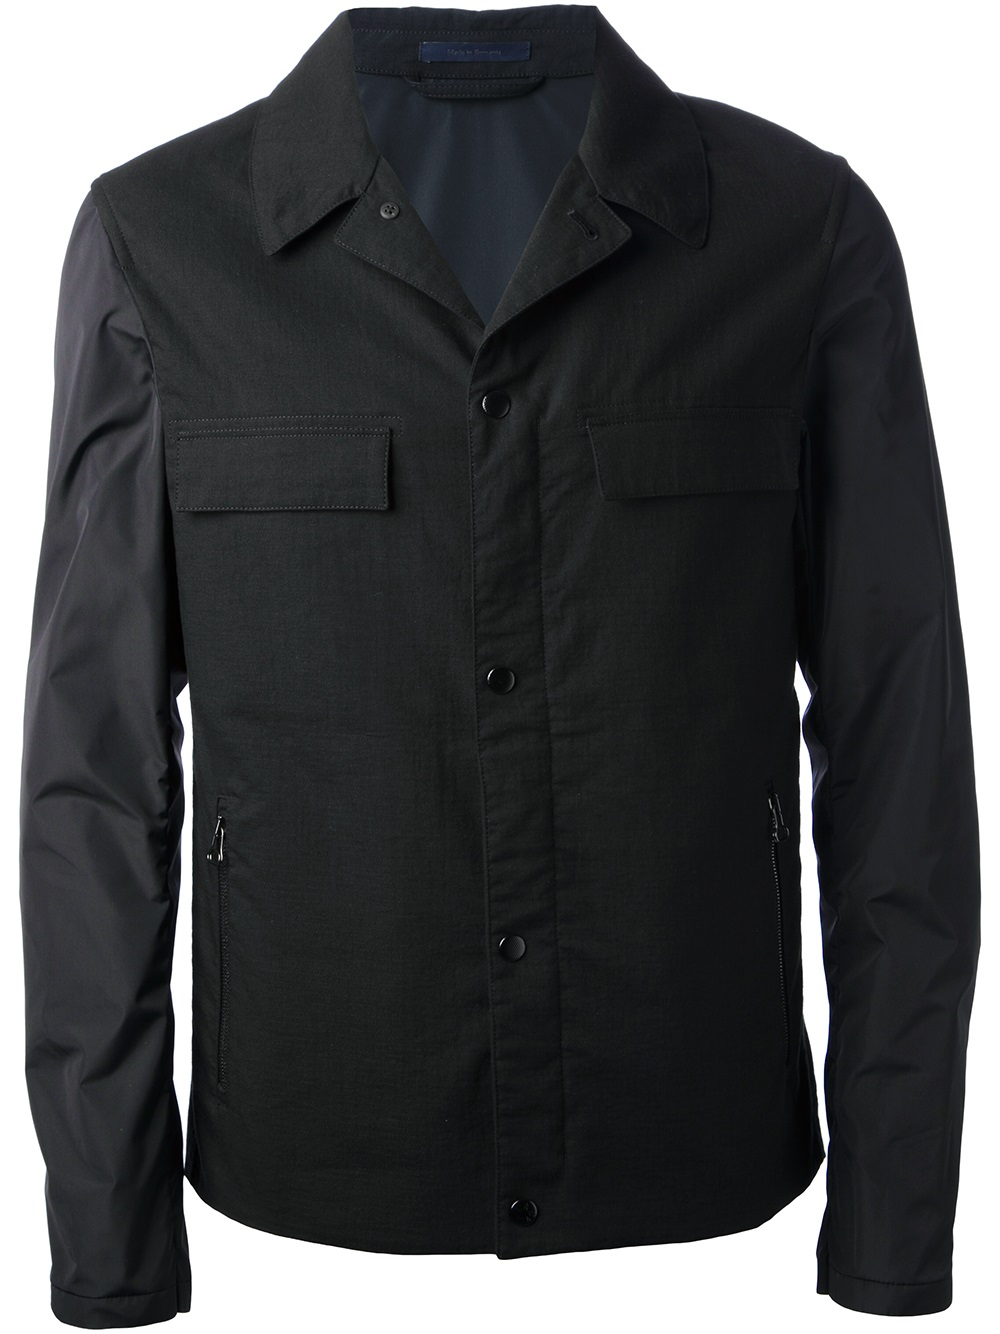 Lyst - Lanvin Button Down Jacket in Black for Men